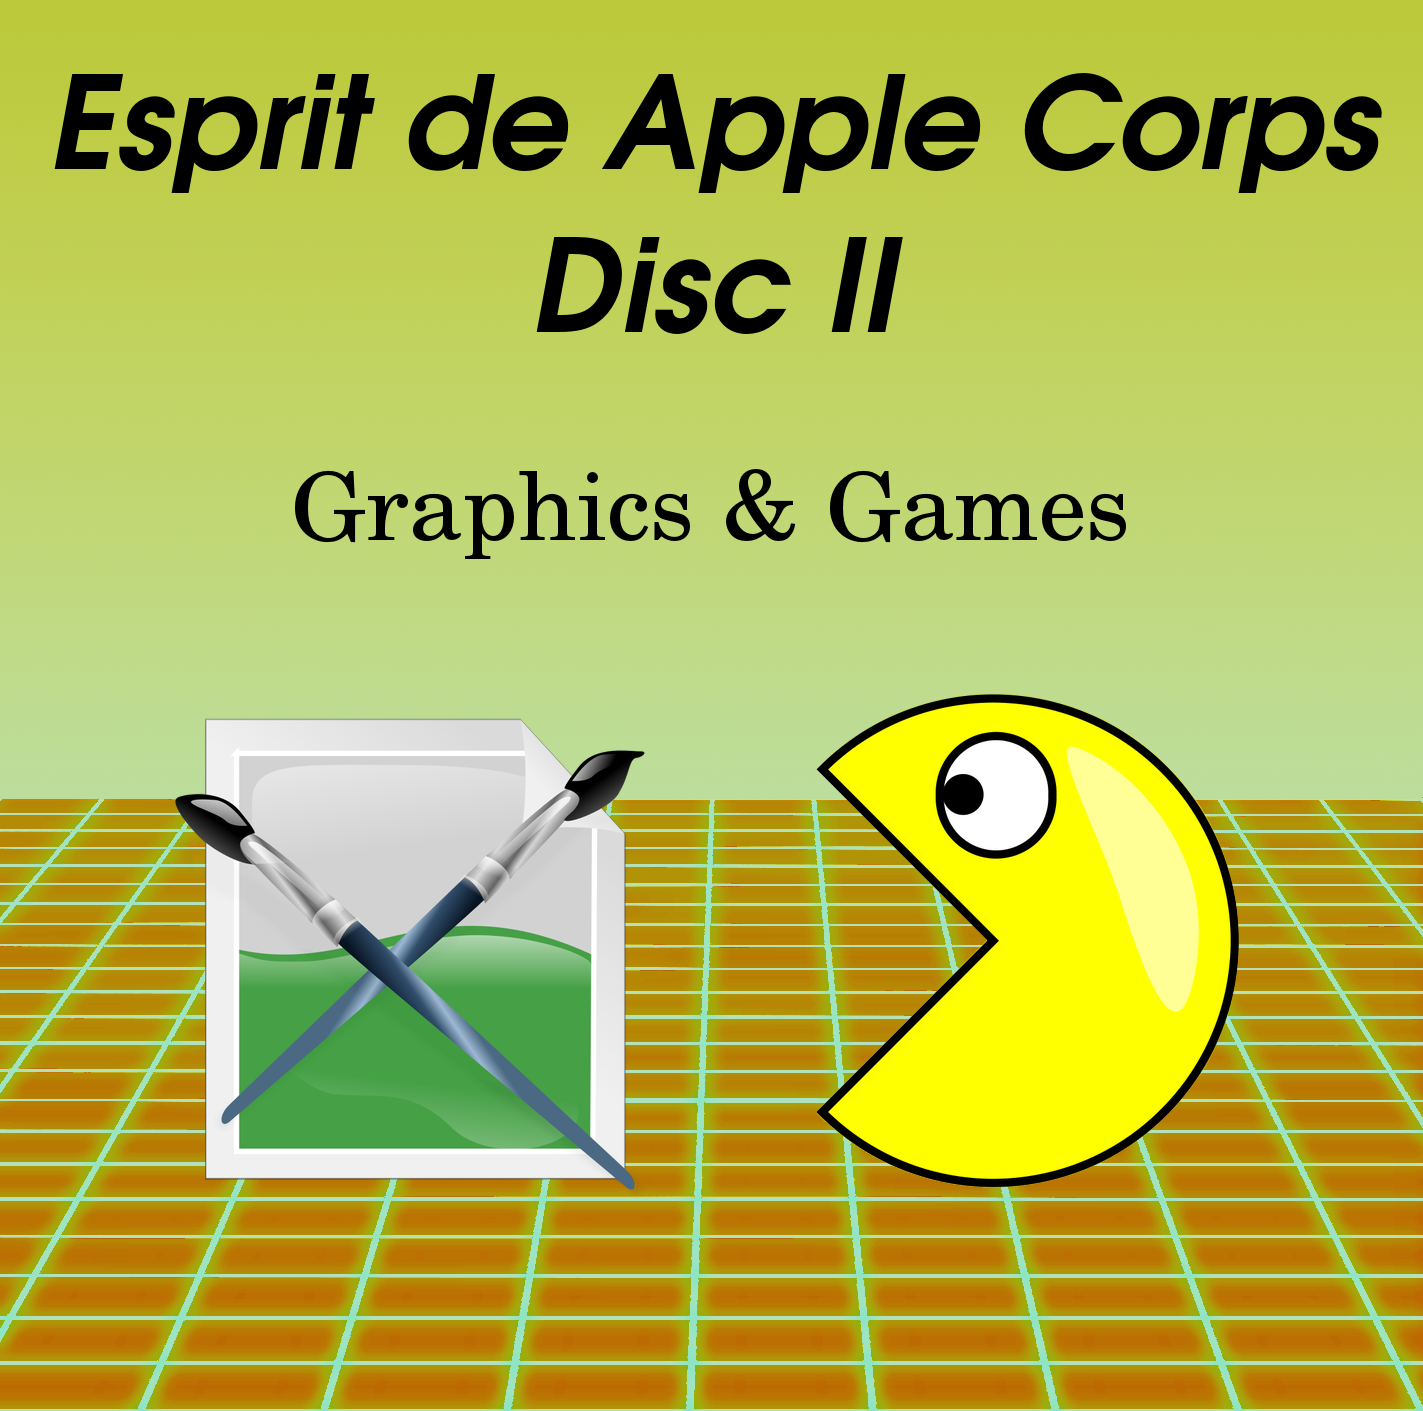 Esprit de Apple Corp CD 2 label